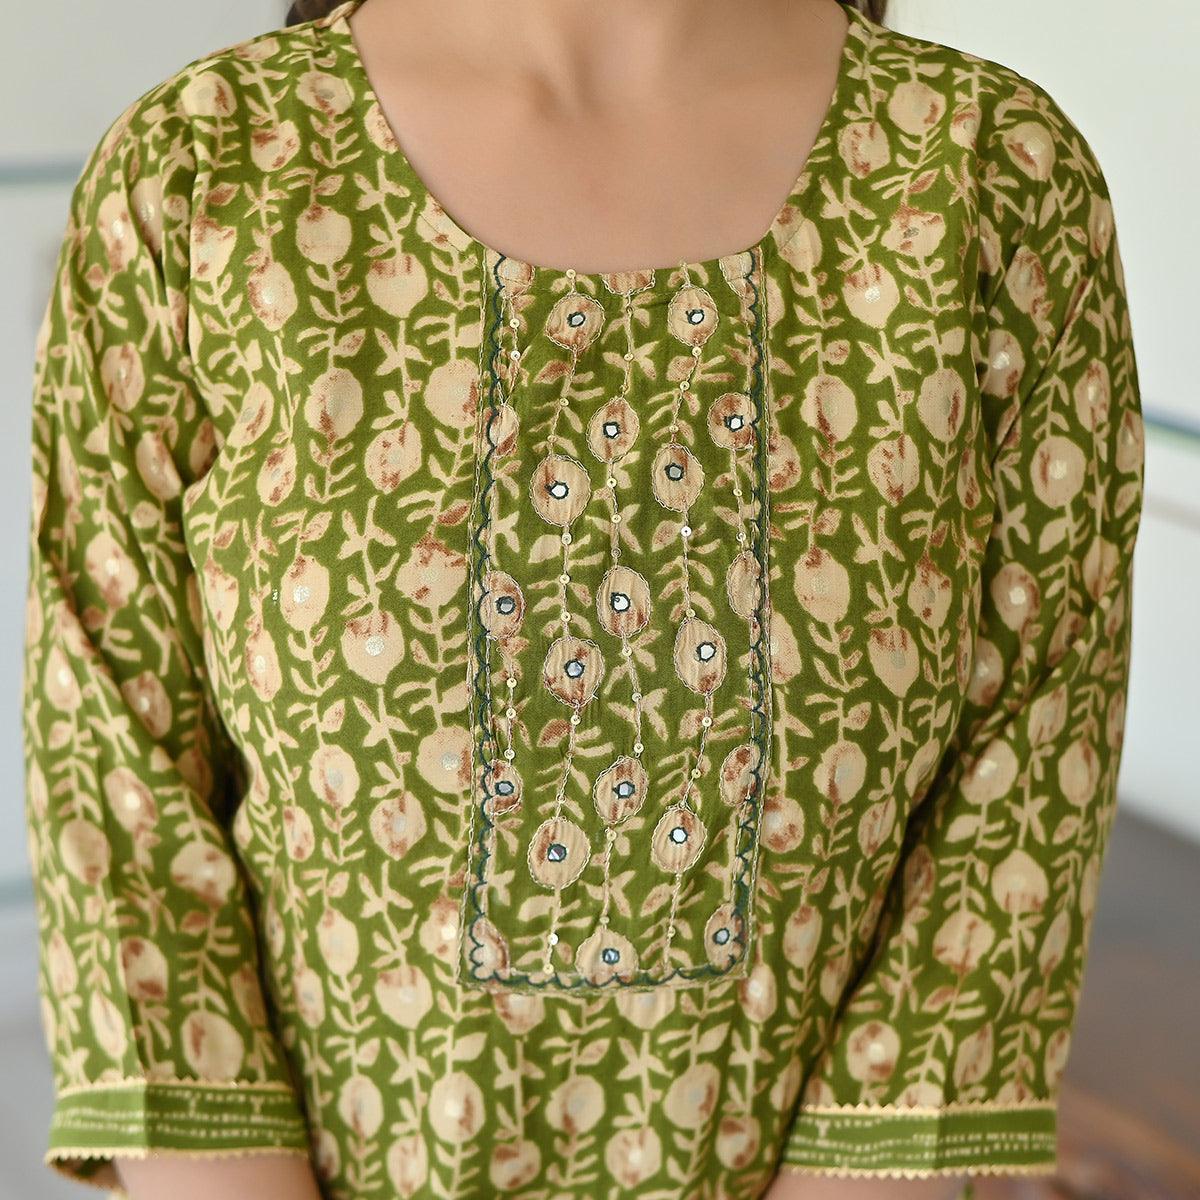 Green Floral Foil Printed Chanderi Kurti Pant Set With Dupatta - Peachmode